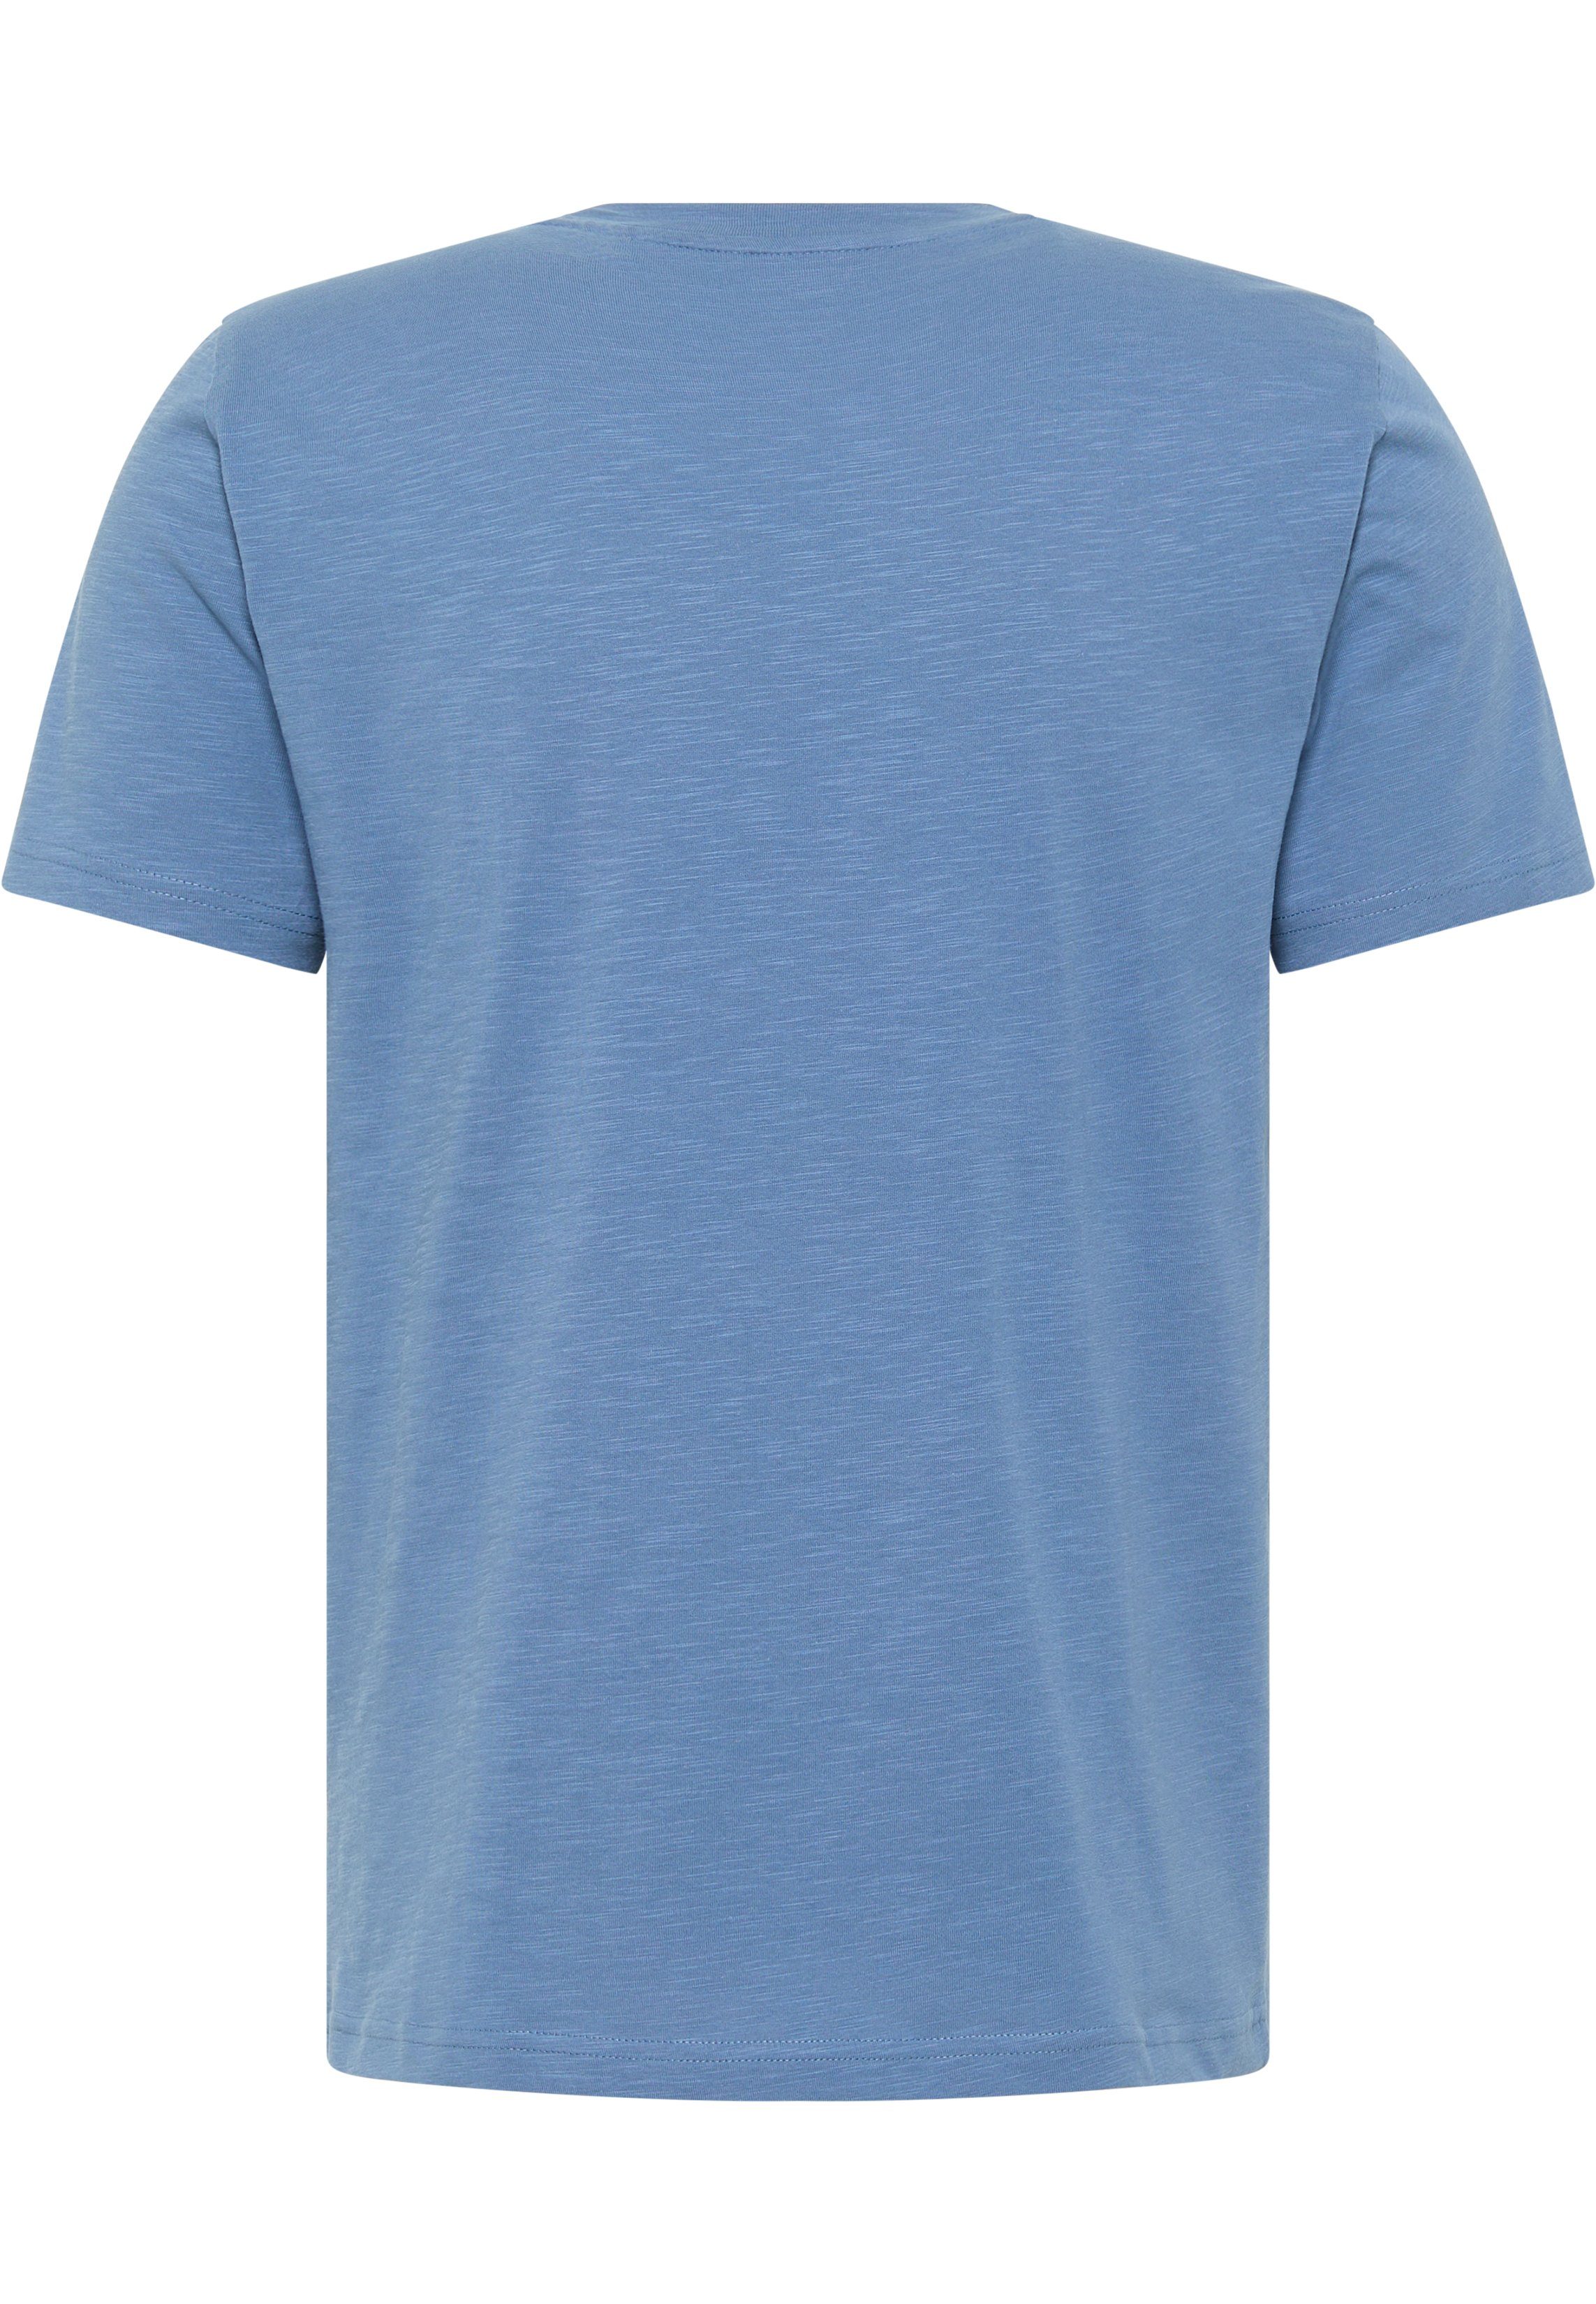 Alex MUSTANG C T-Shirt Style hellblau Print